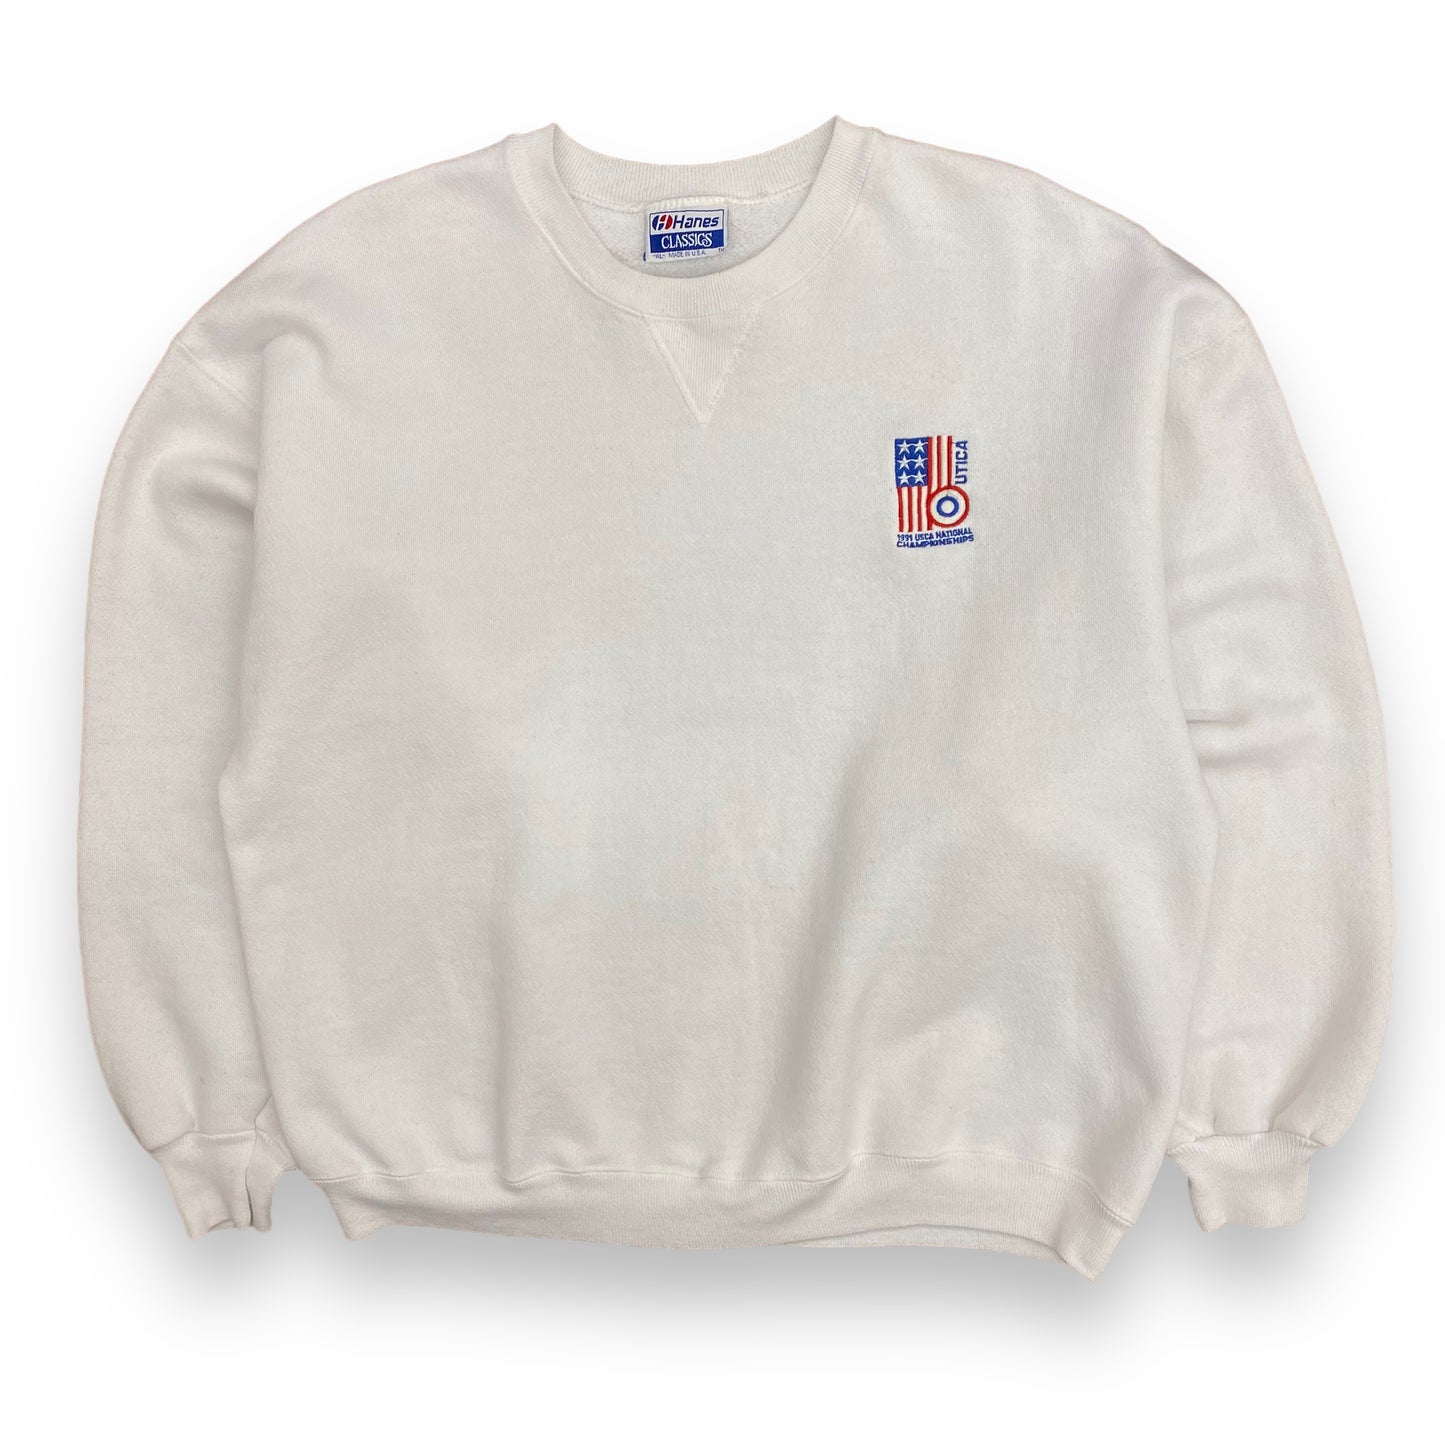 1991 US Curling Association National Championship: Utica NY Sweatshirt - Size XL